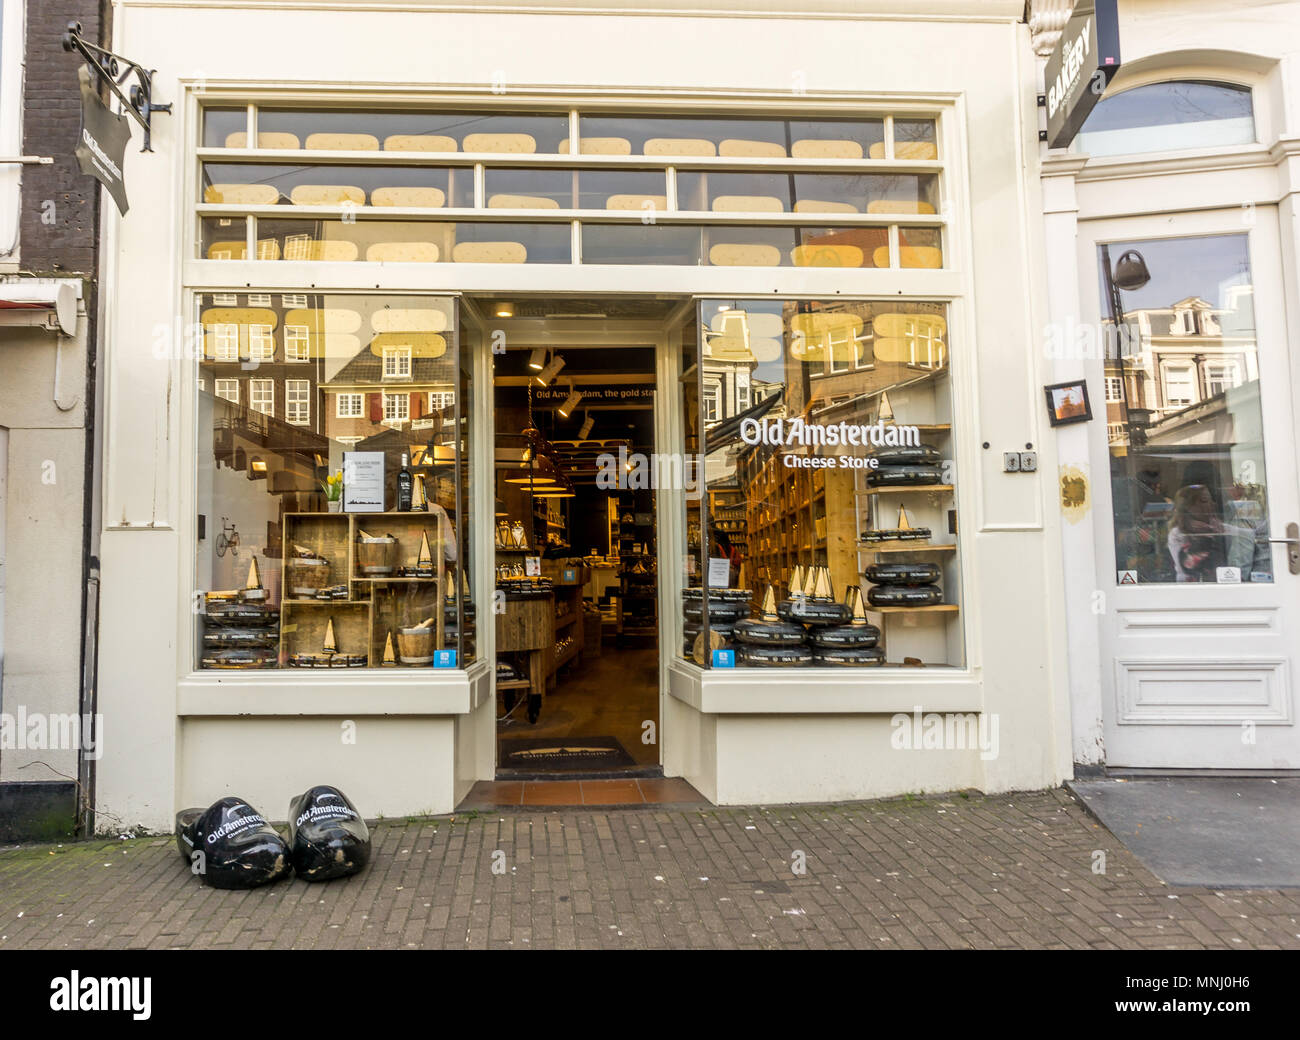 Old Amsterdam Cheese store, Amsterdam, Netherlands, Europe. Stock Photo